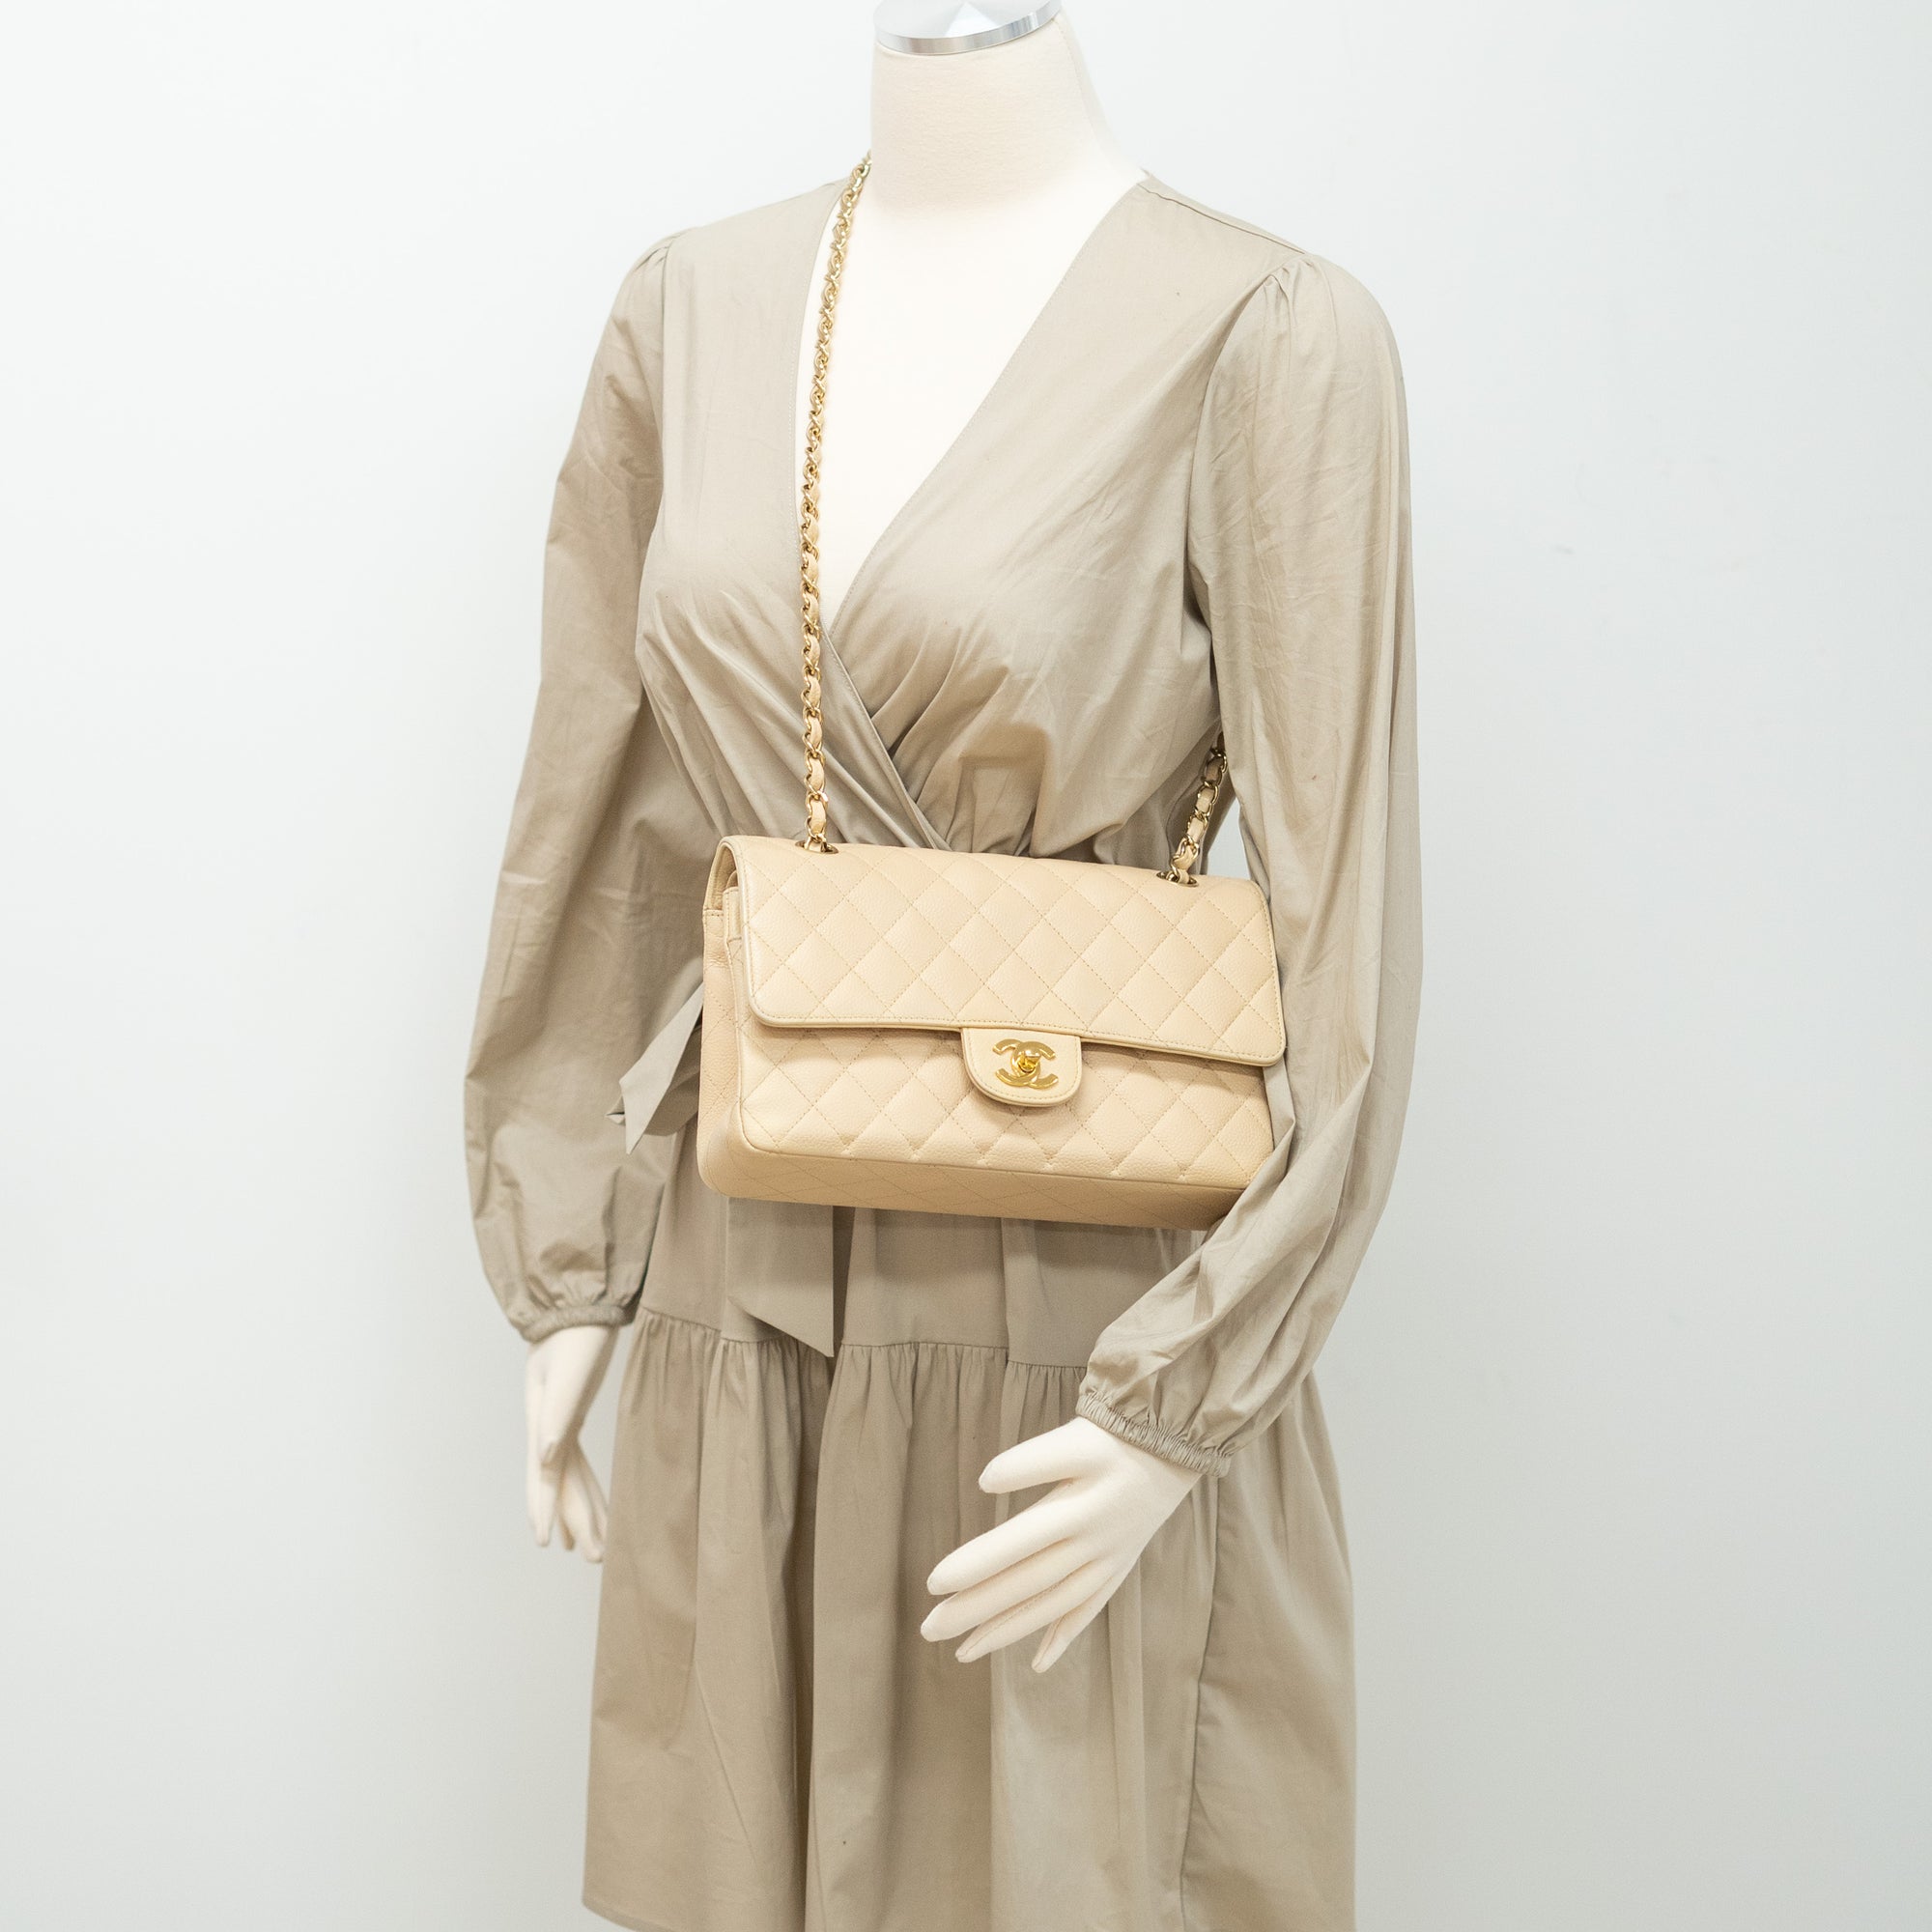 Chanel Classic Medium Large Double Flap Bag Beige - THE PURSE AFFAIR